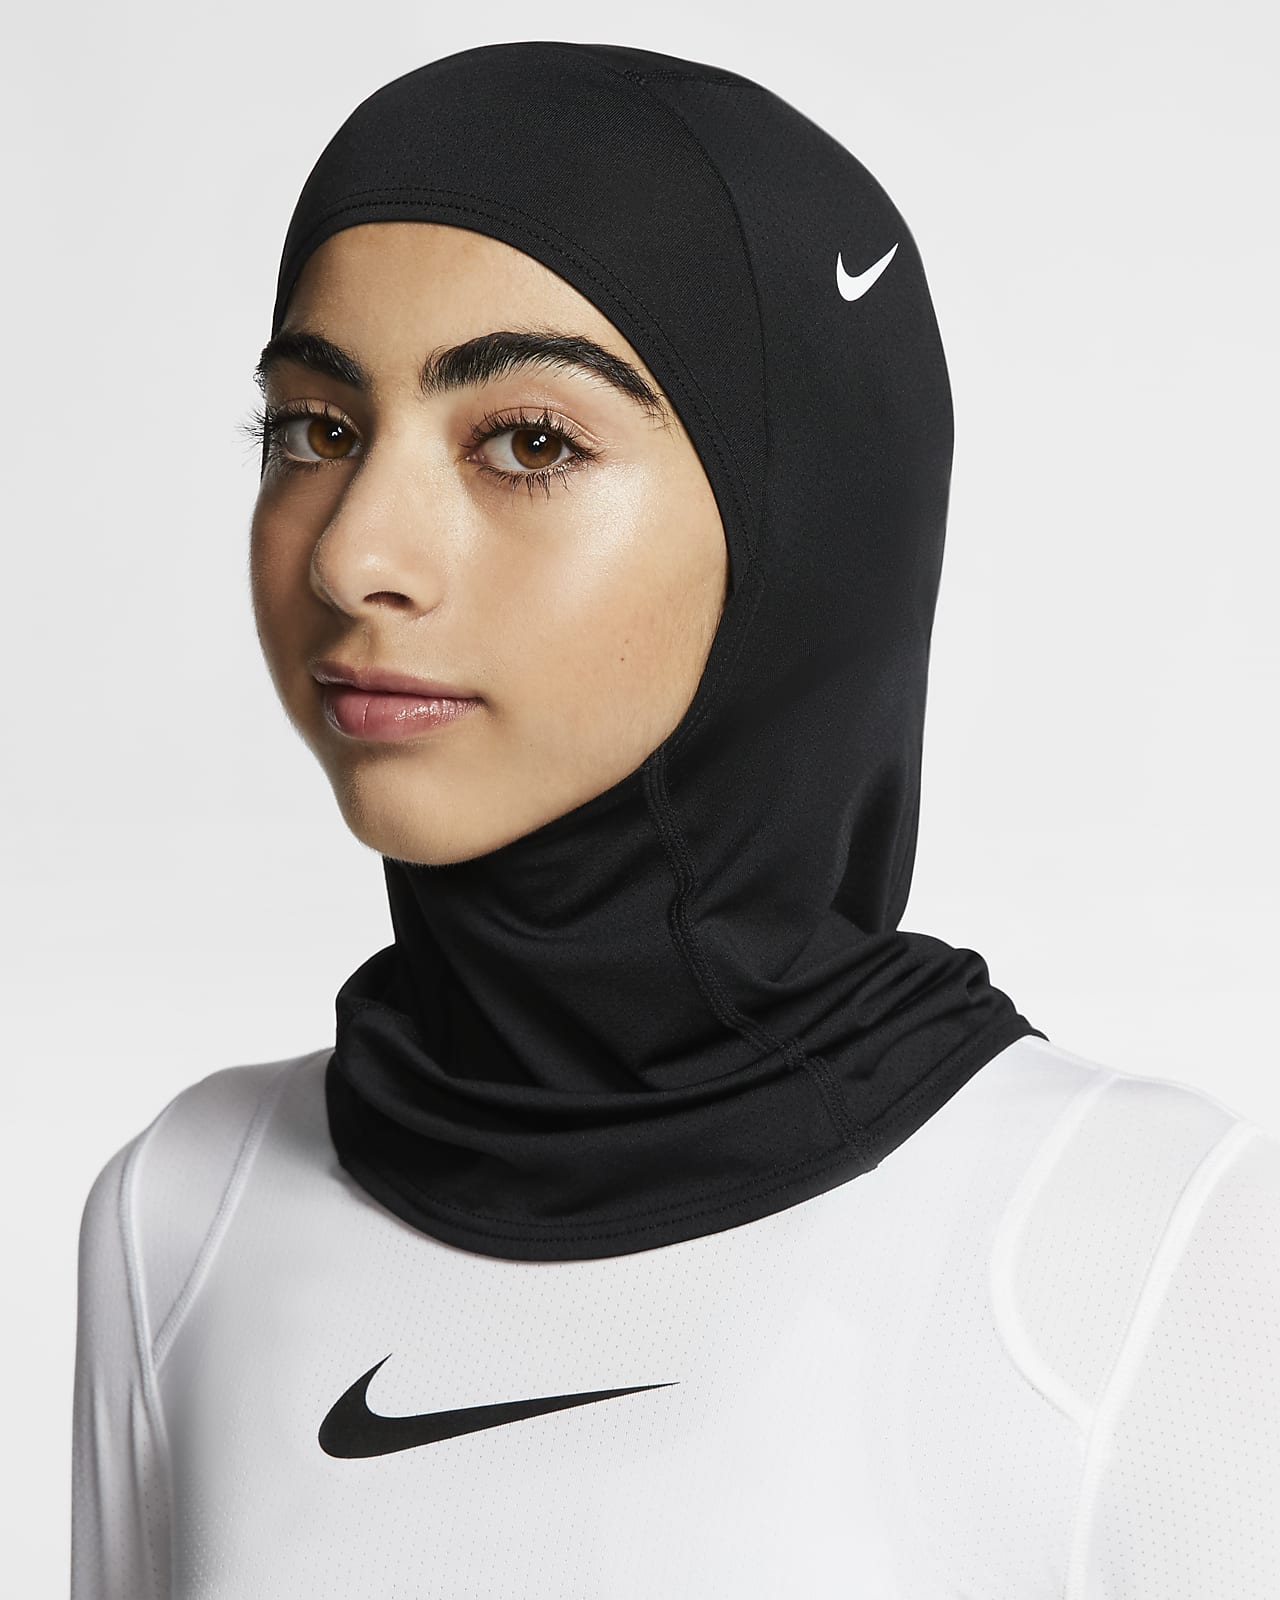 nike performance hijab